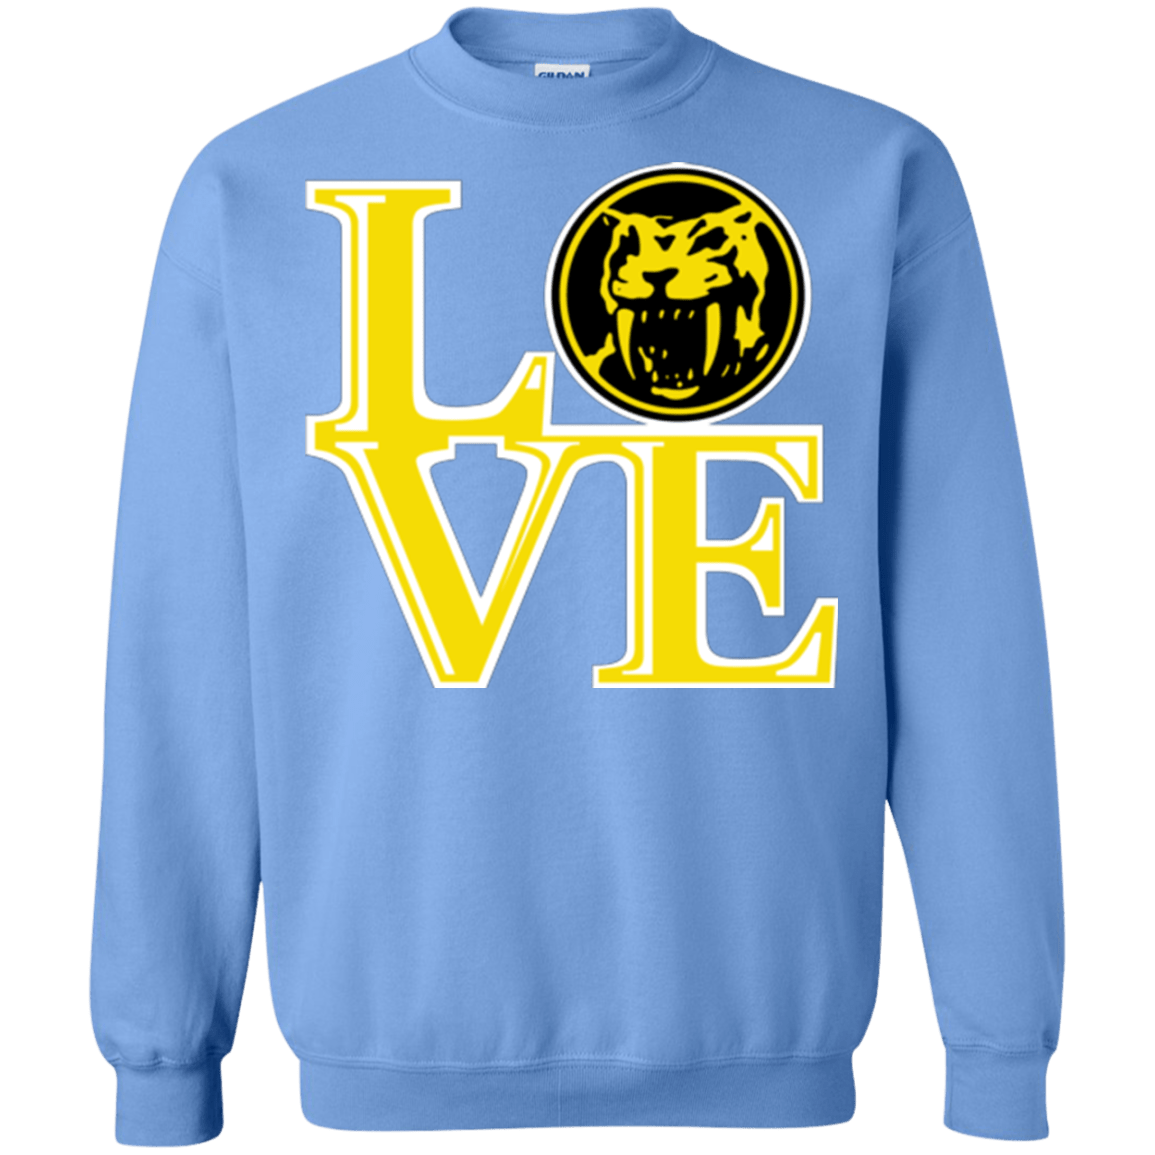 Sweatshirts Carolina Blue / Small Yellow Ranger LOVE Crewneck Sweatshirt